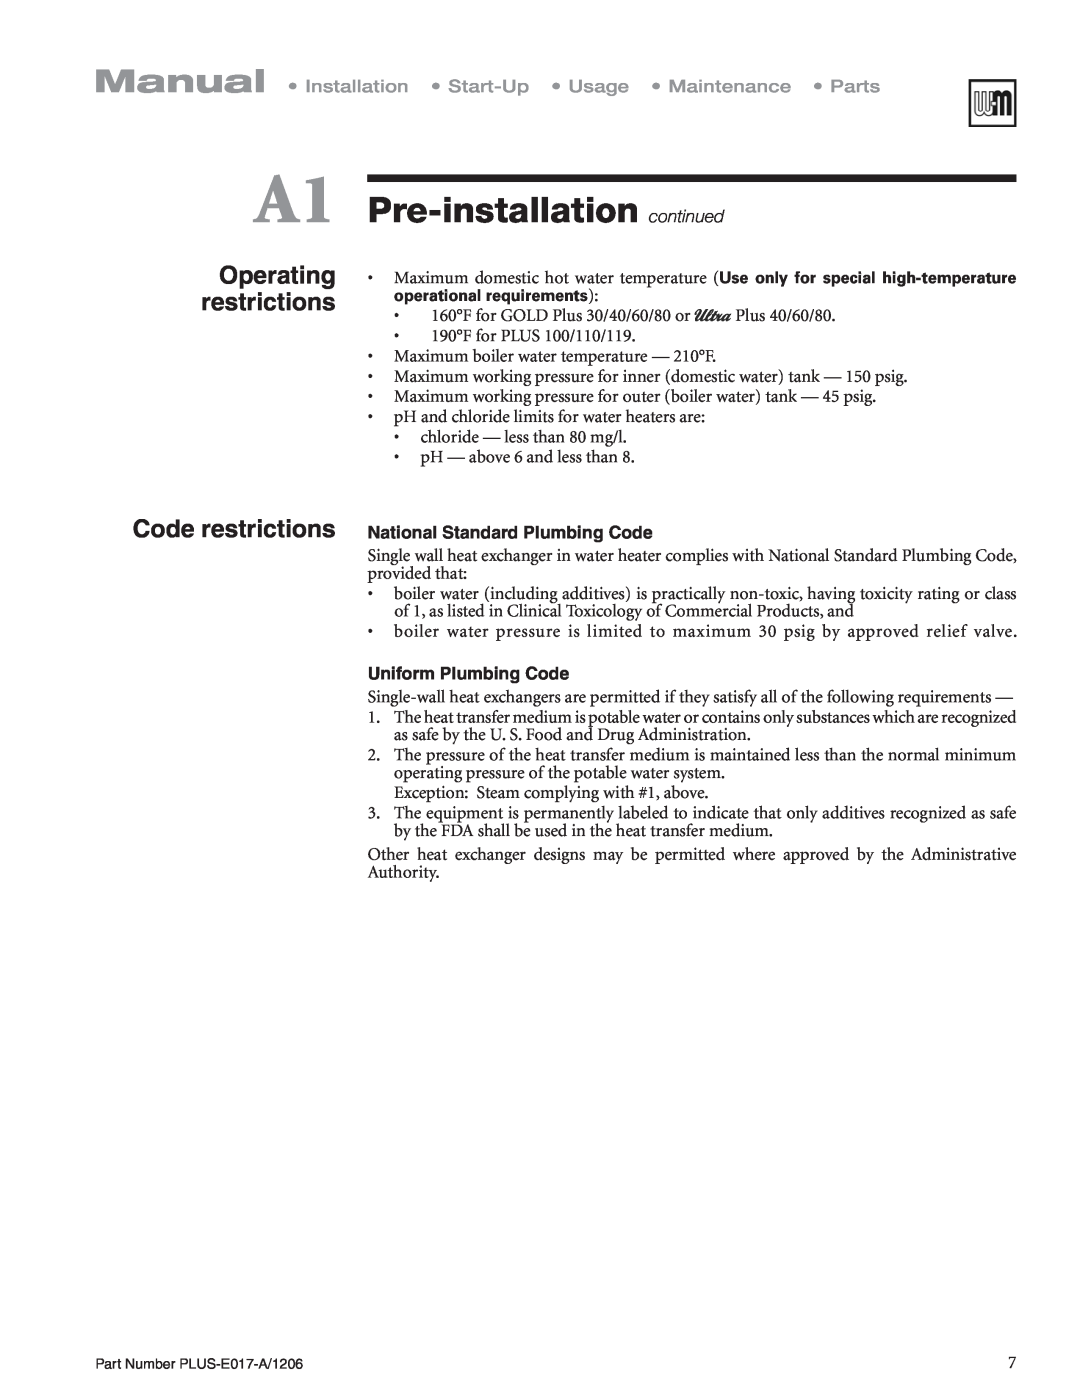 Weil-McLain PLUS-E017-A/1206 manual A1 Pre-installation continued, restrictions, Uniform Plumbing Code 